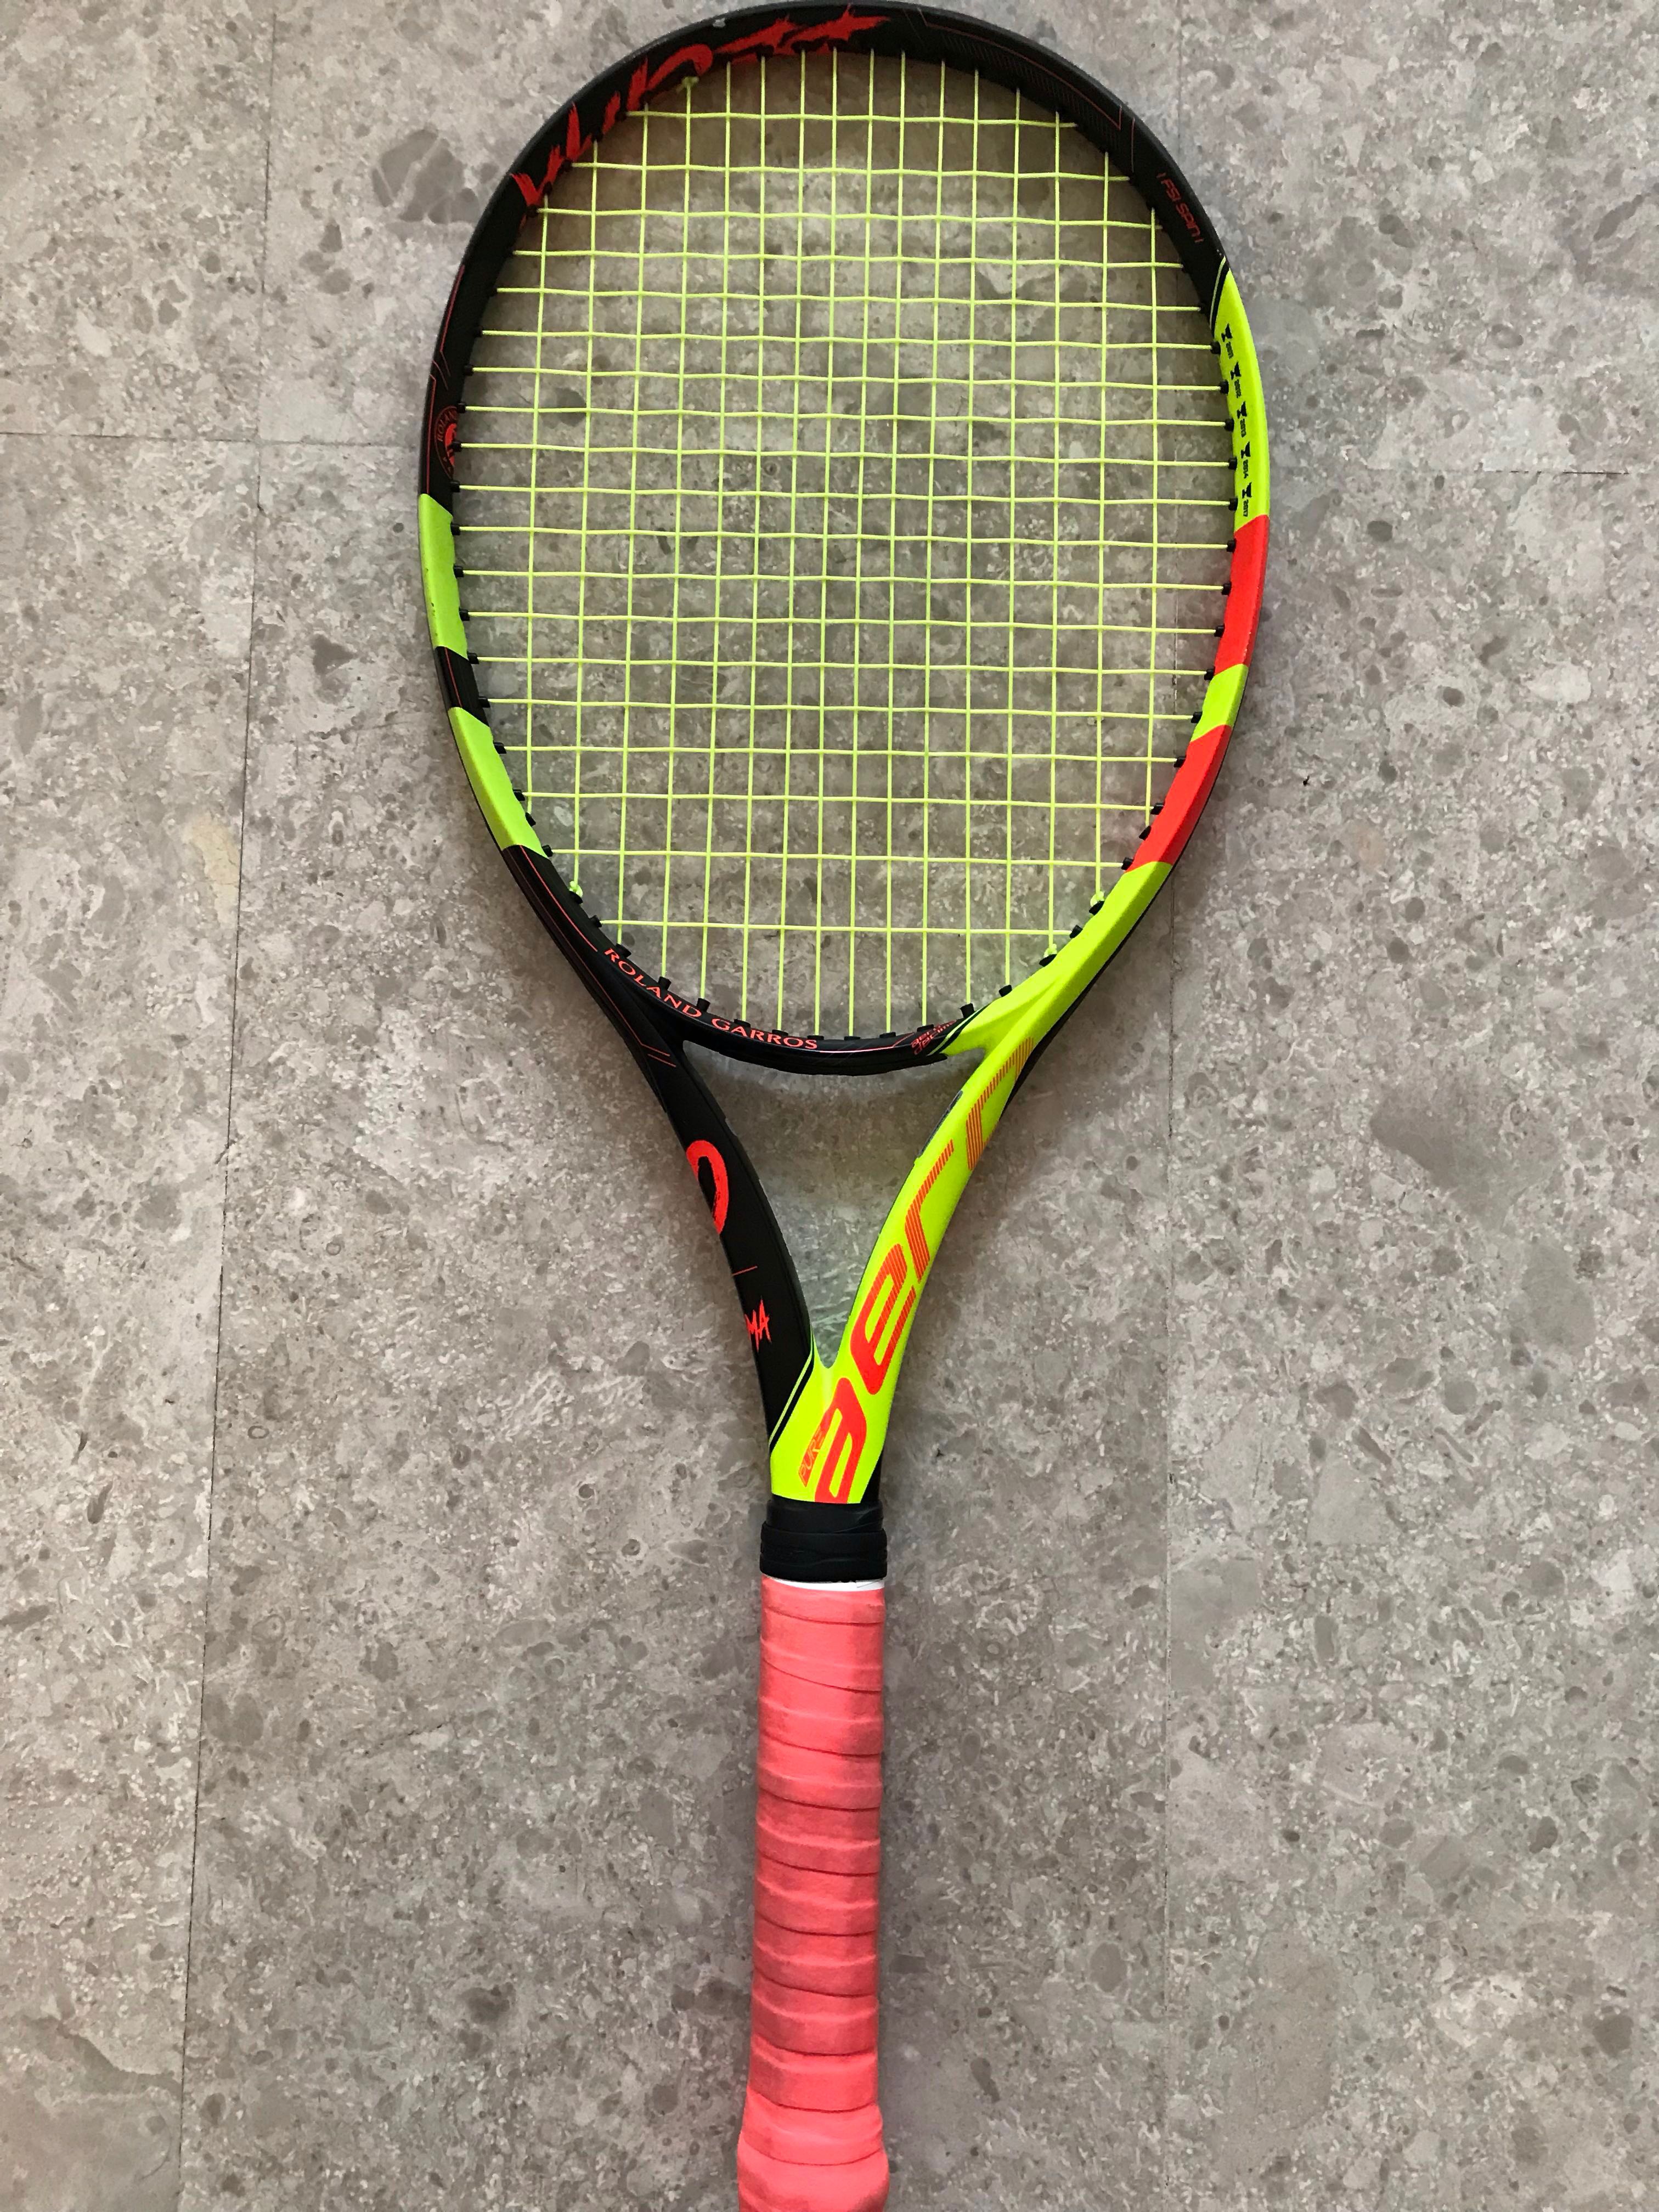 Babolat Pure Aero Decima Limited Edition Tennis Racquet